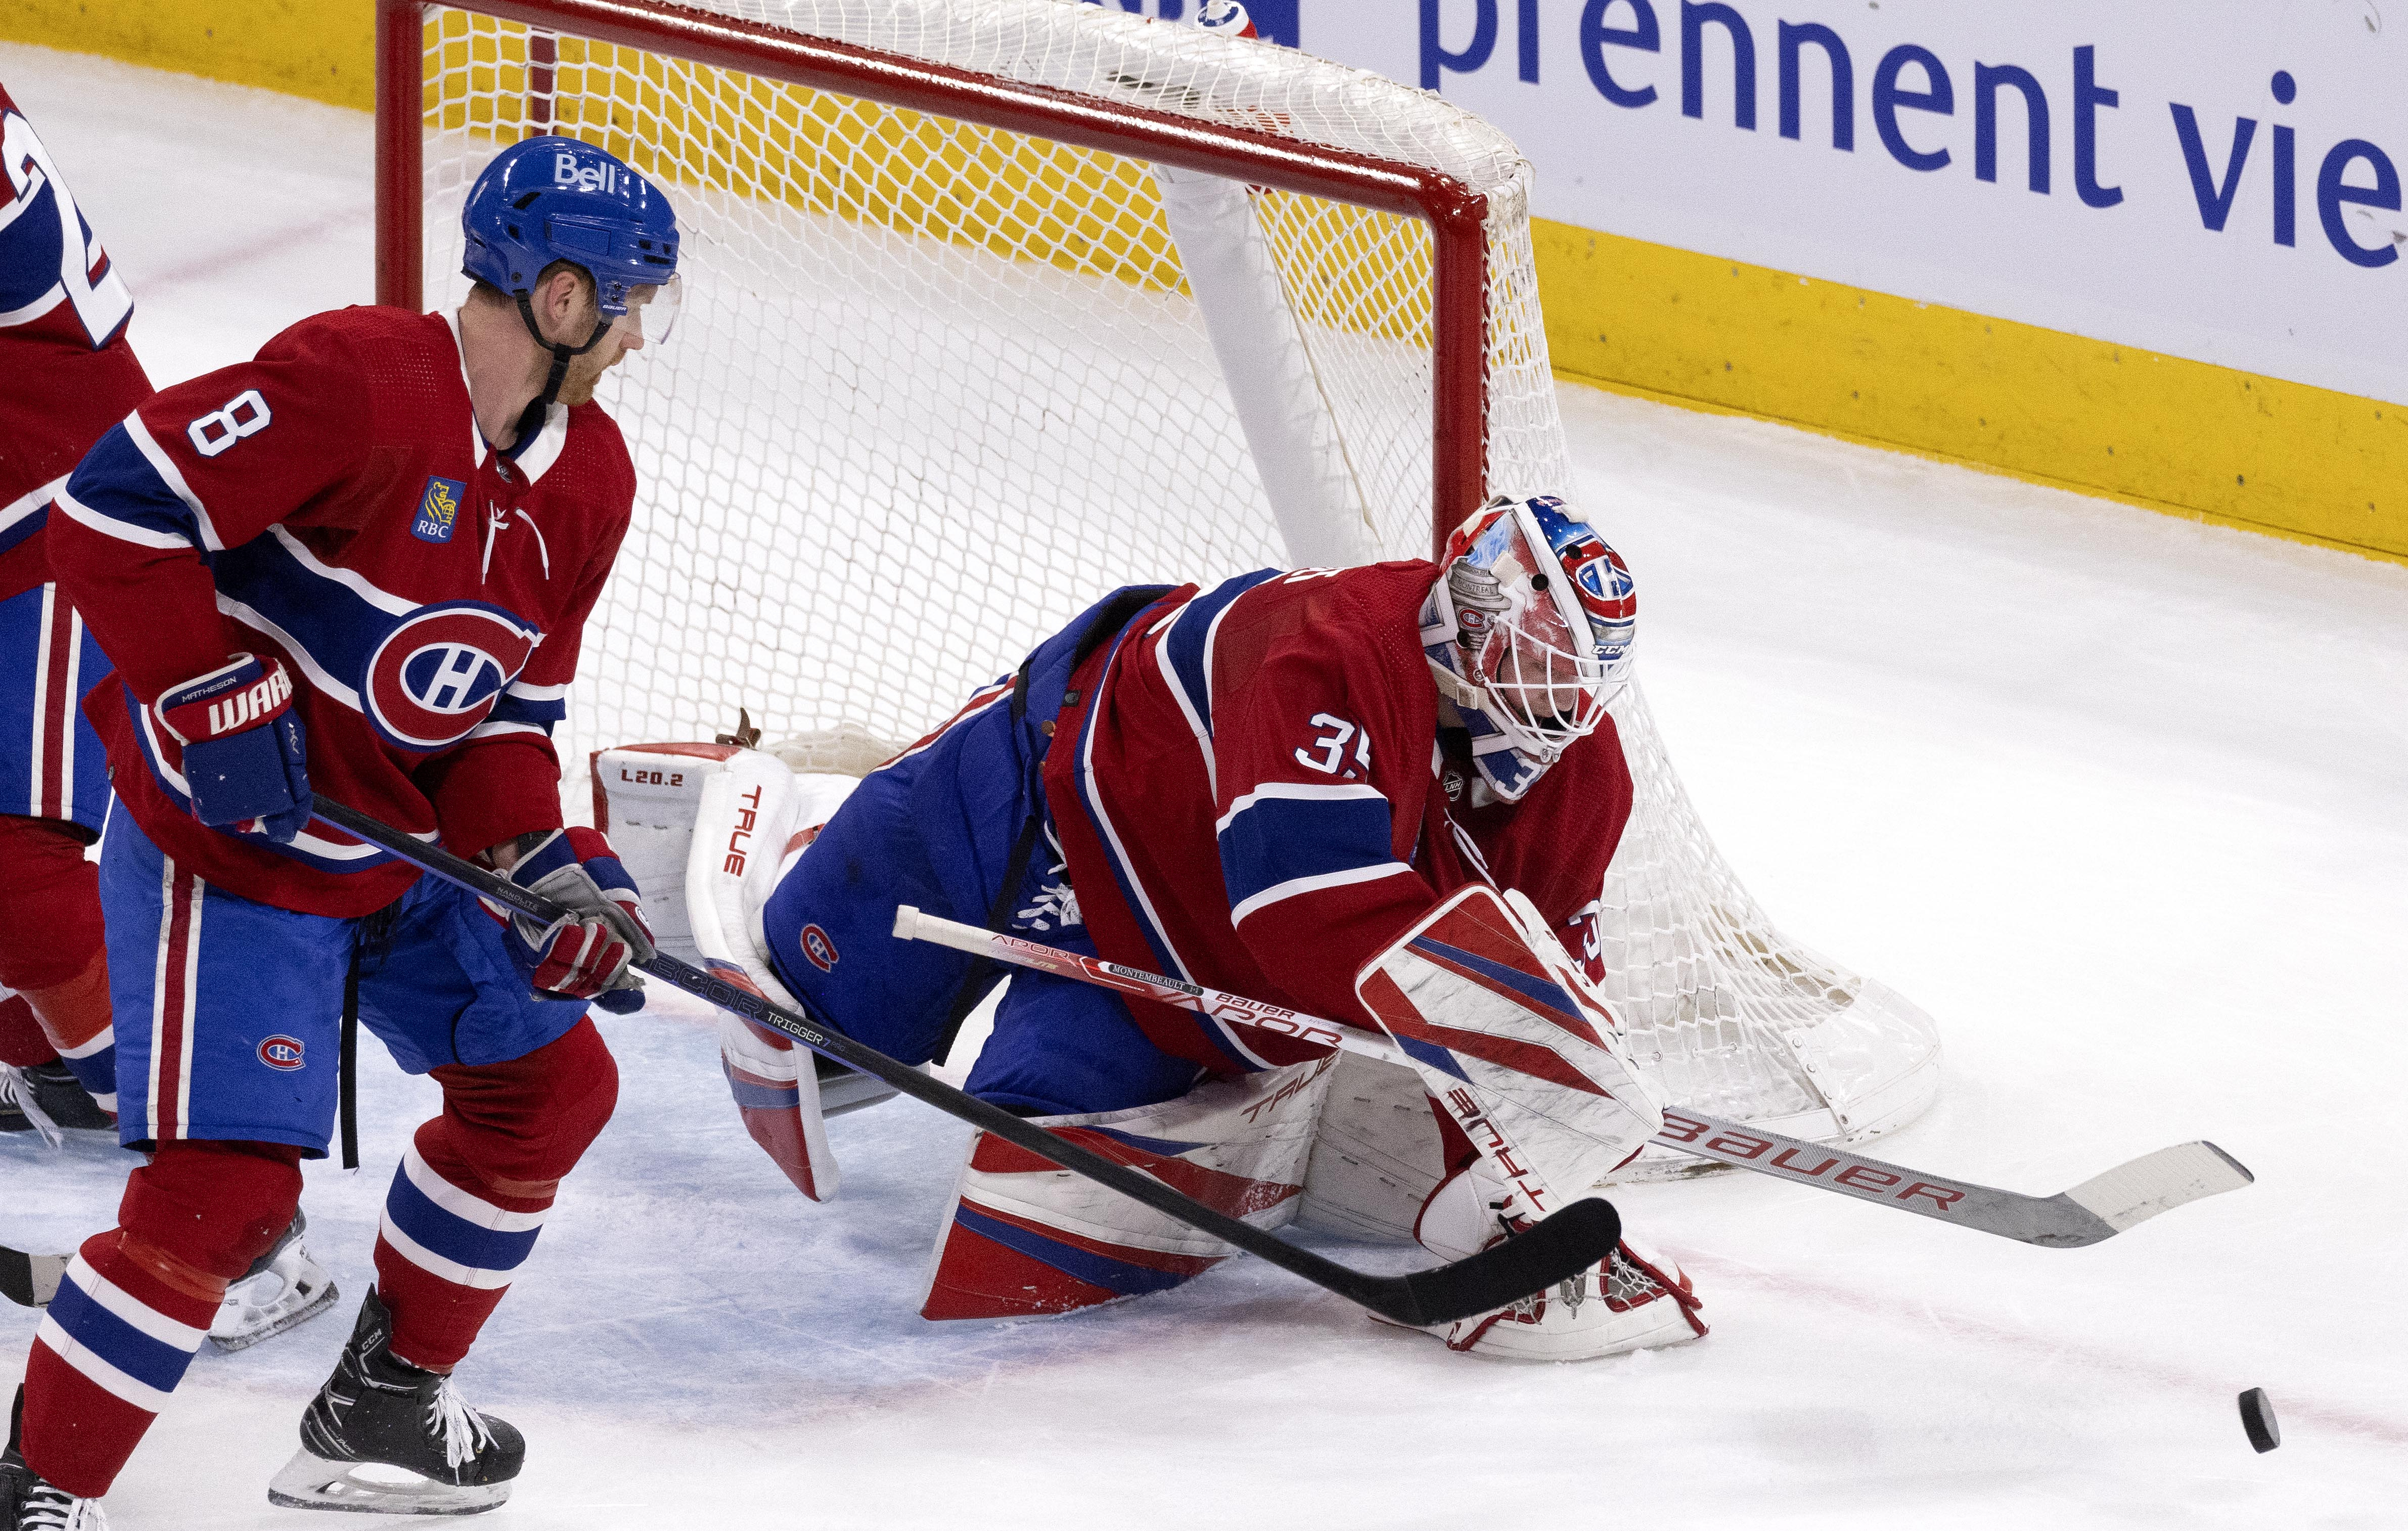 Call Of The Wilde: Carolina Hurricanes shutout the Montreal Canadiens